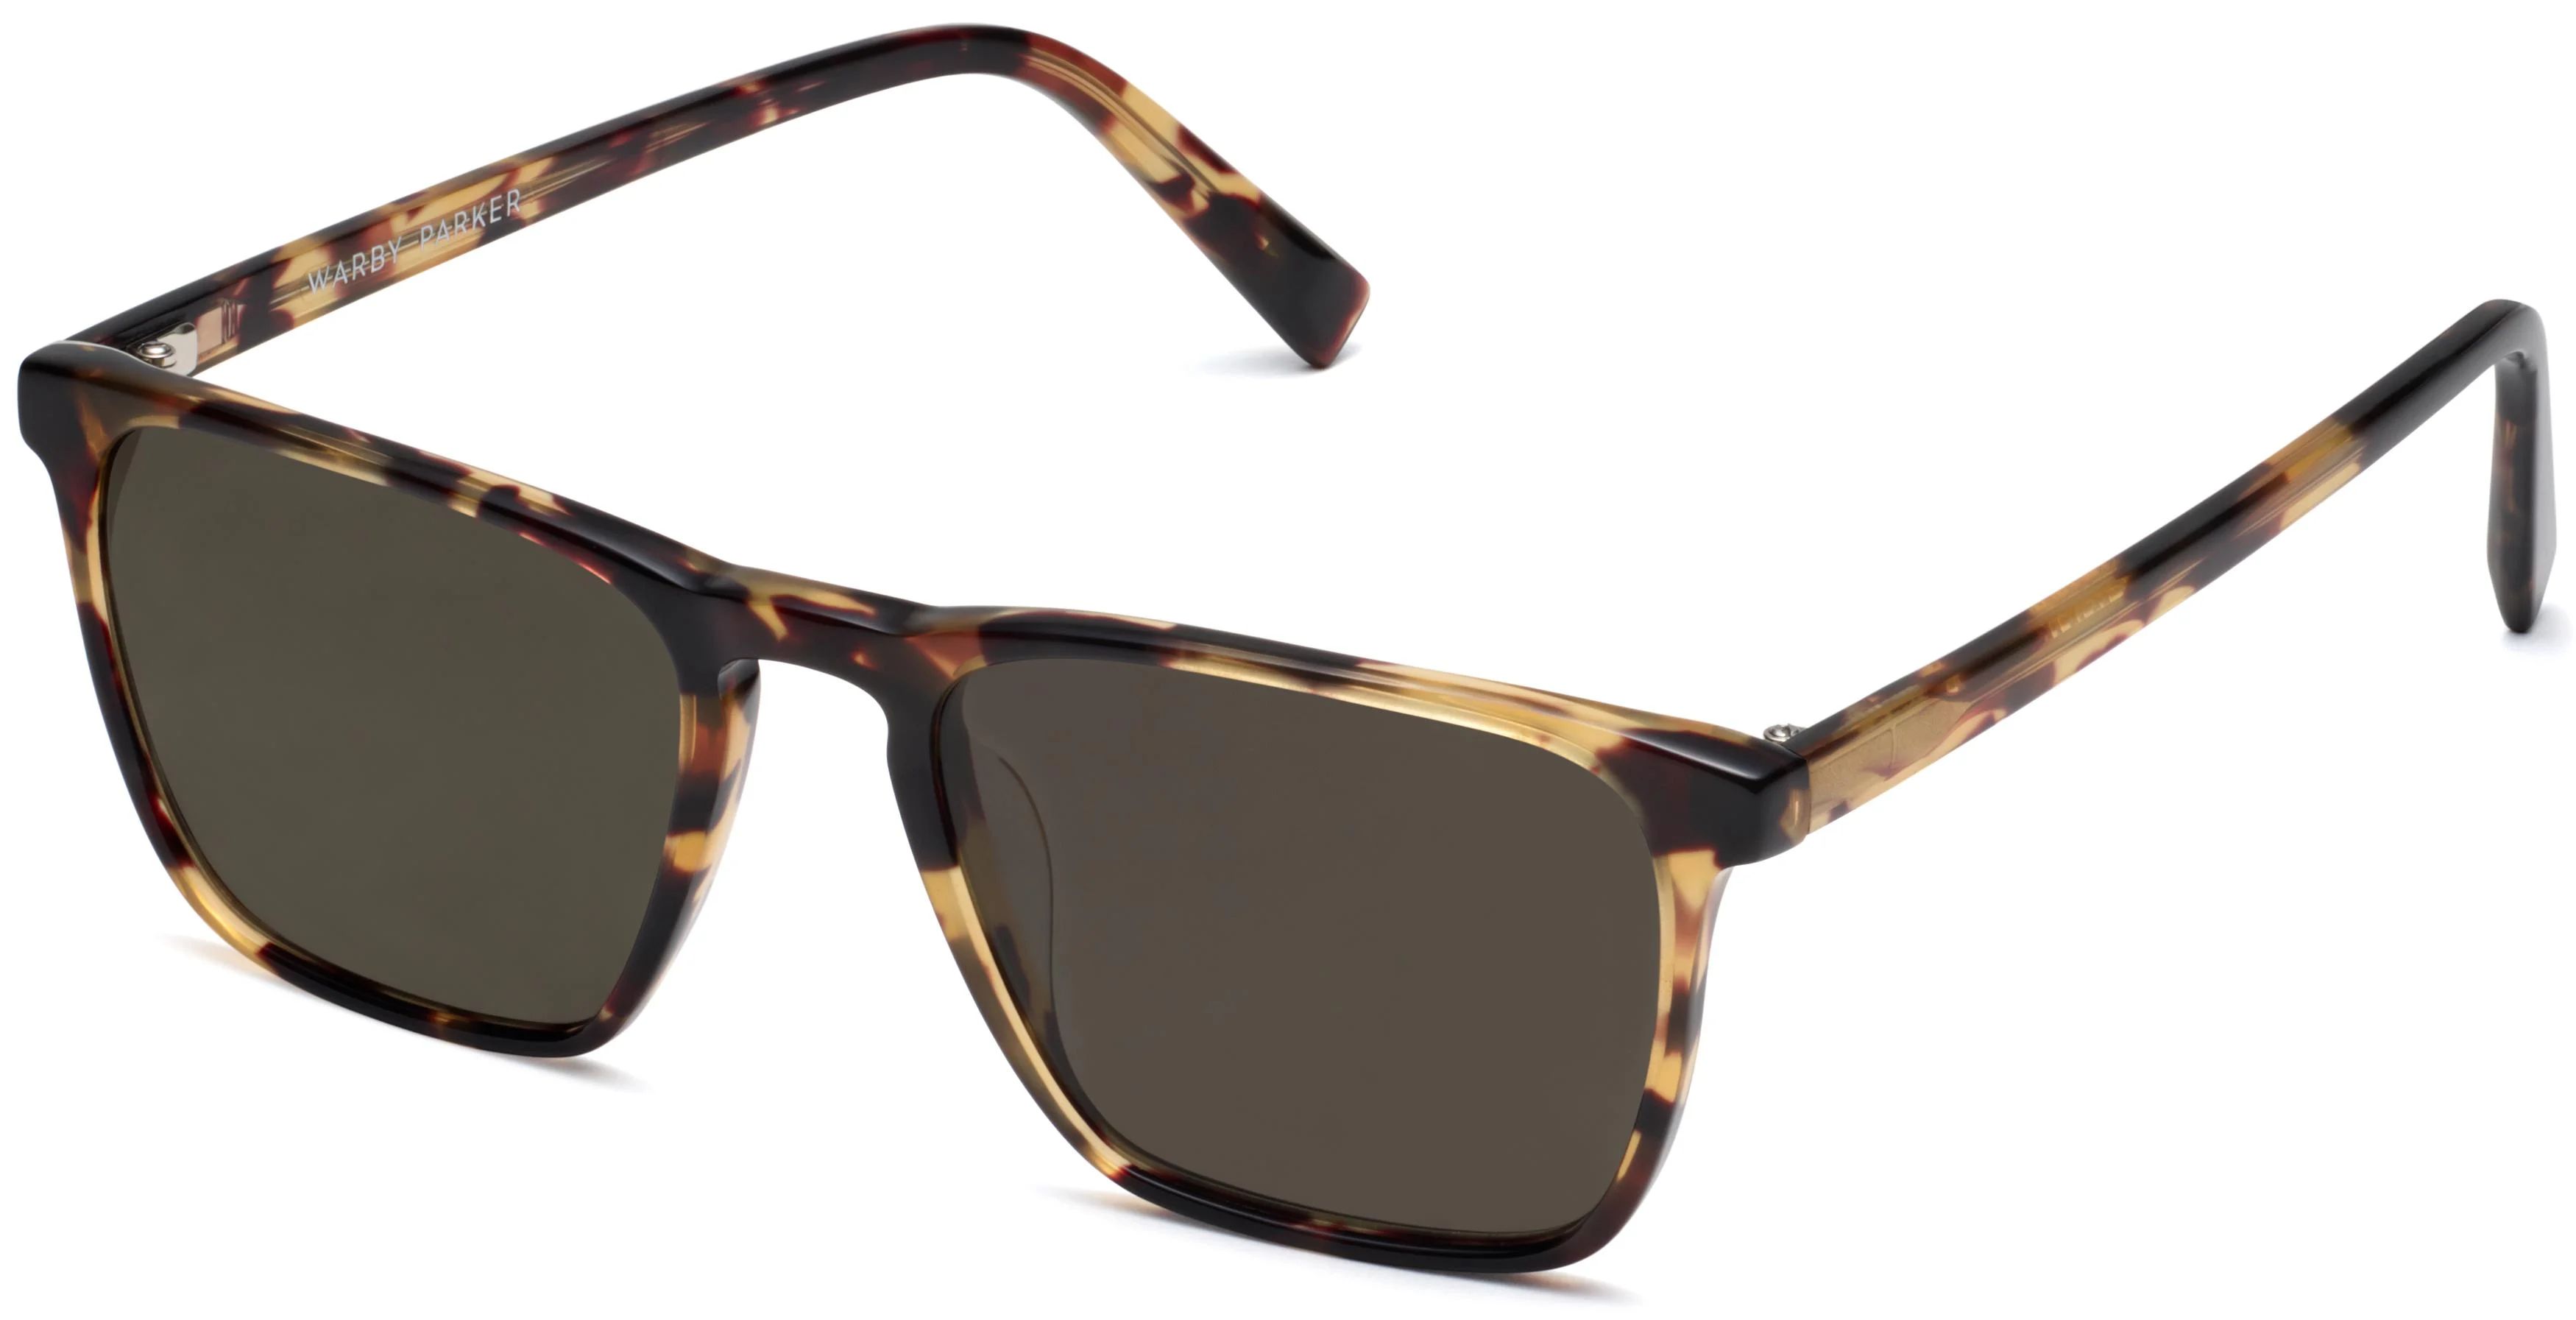 Sutton Low Bridge Fit Sunglasses in Walnut Tortoise | Warby Parker | Warby Parker (US)